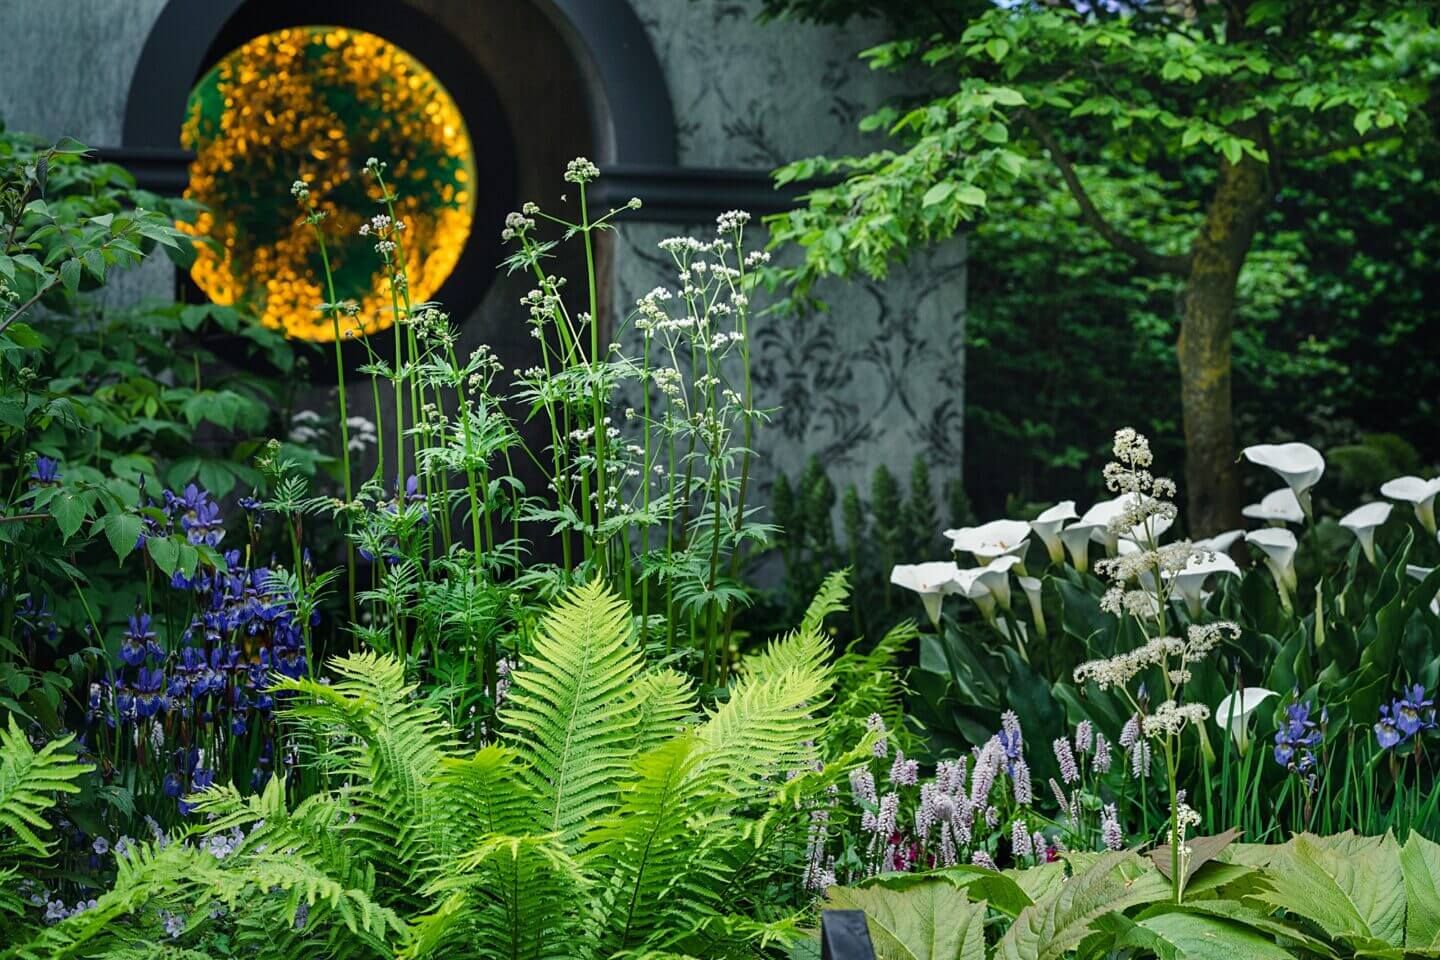 Chris Beardshaw's show garden for Myeloma UK